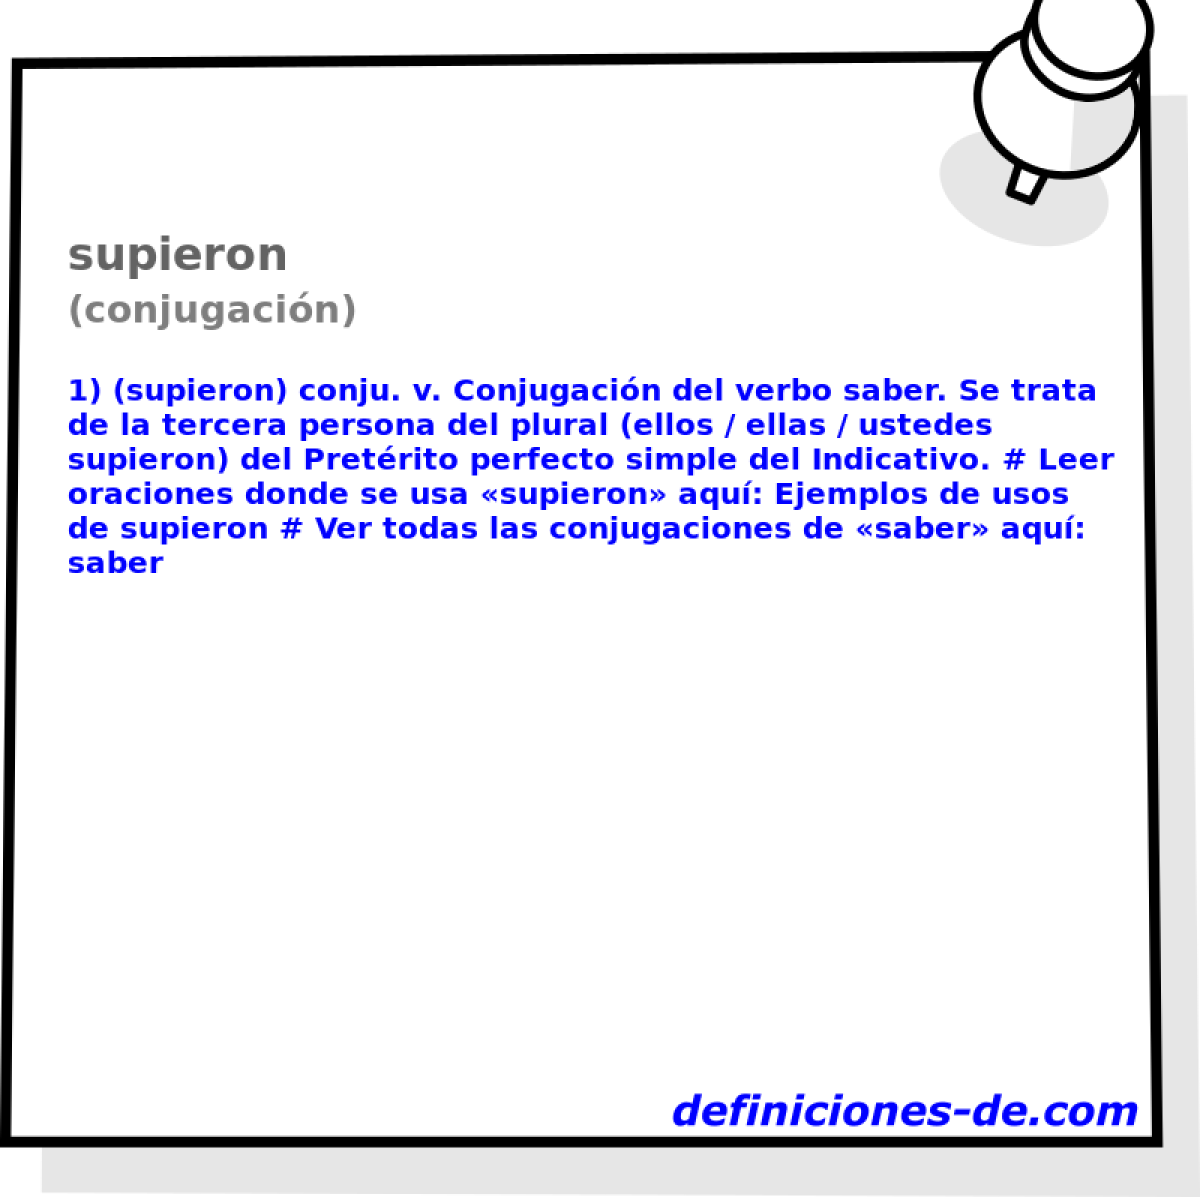 supieron (conjugacin)